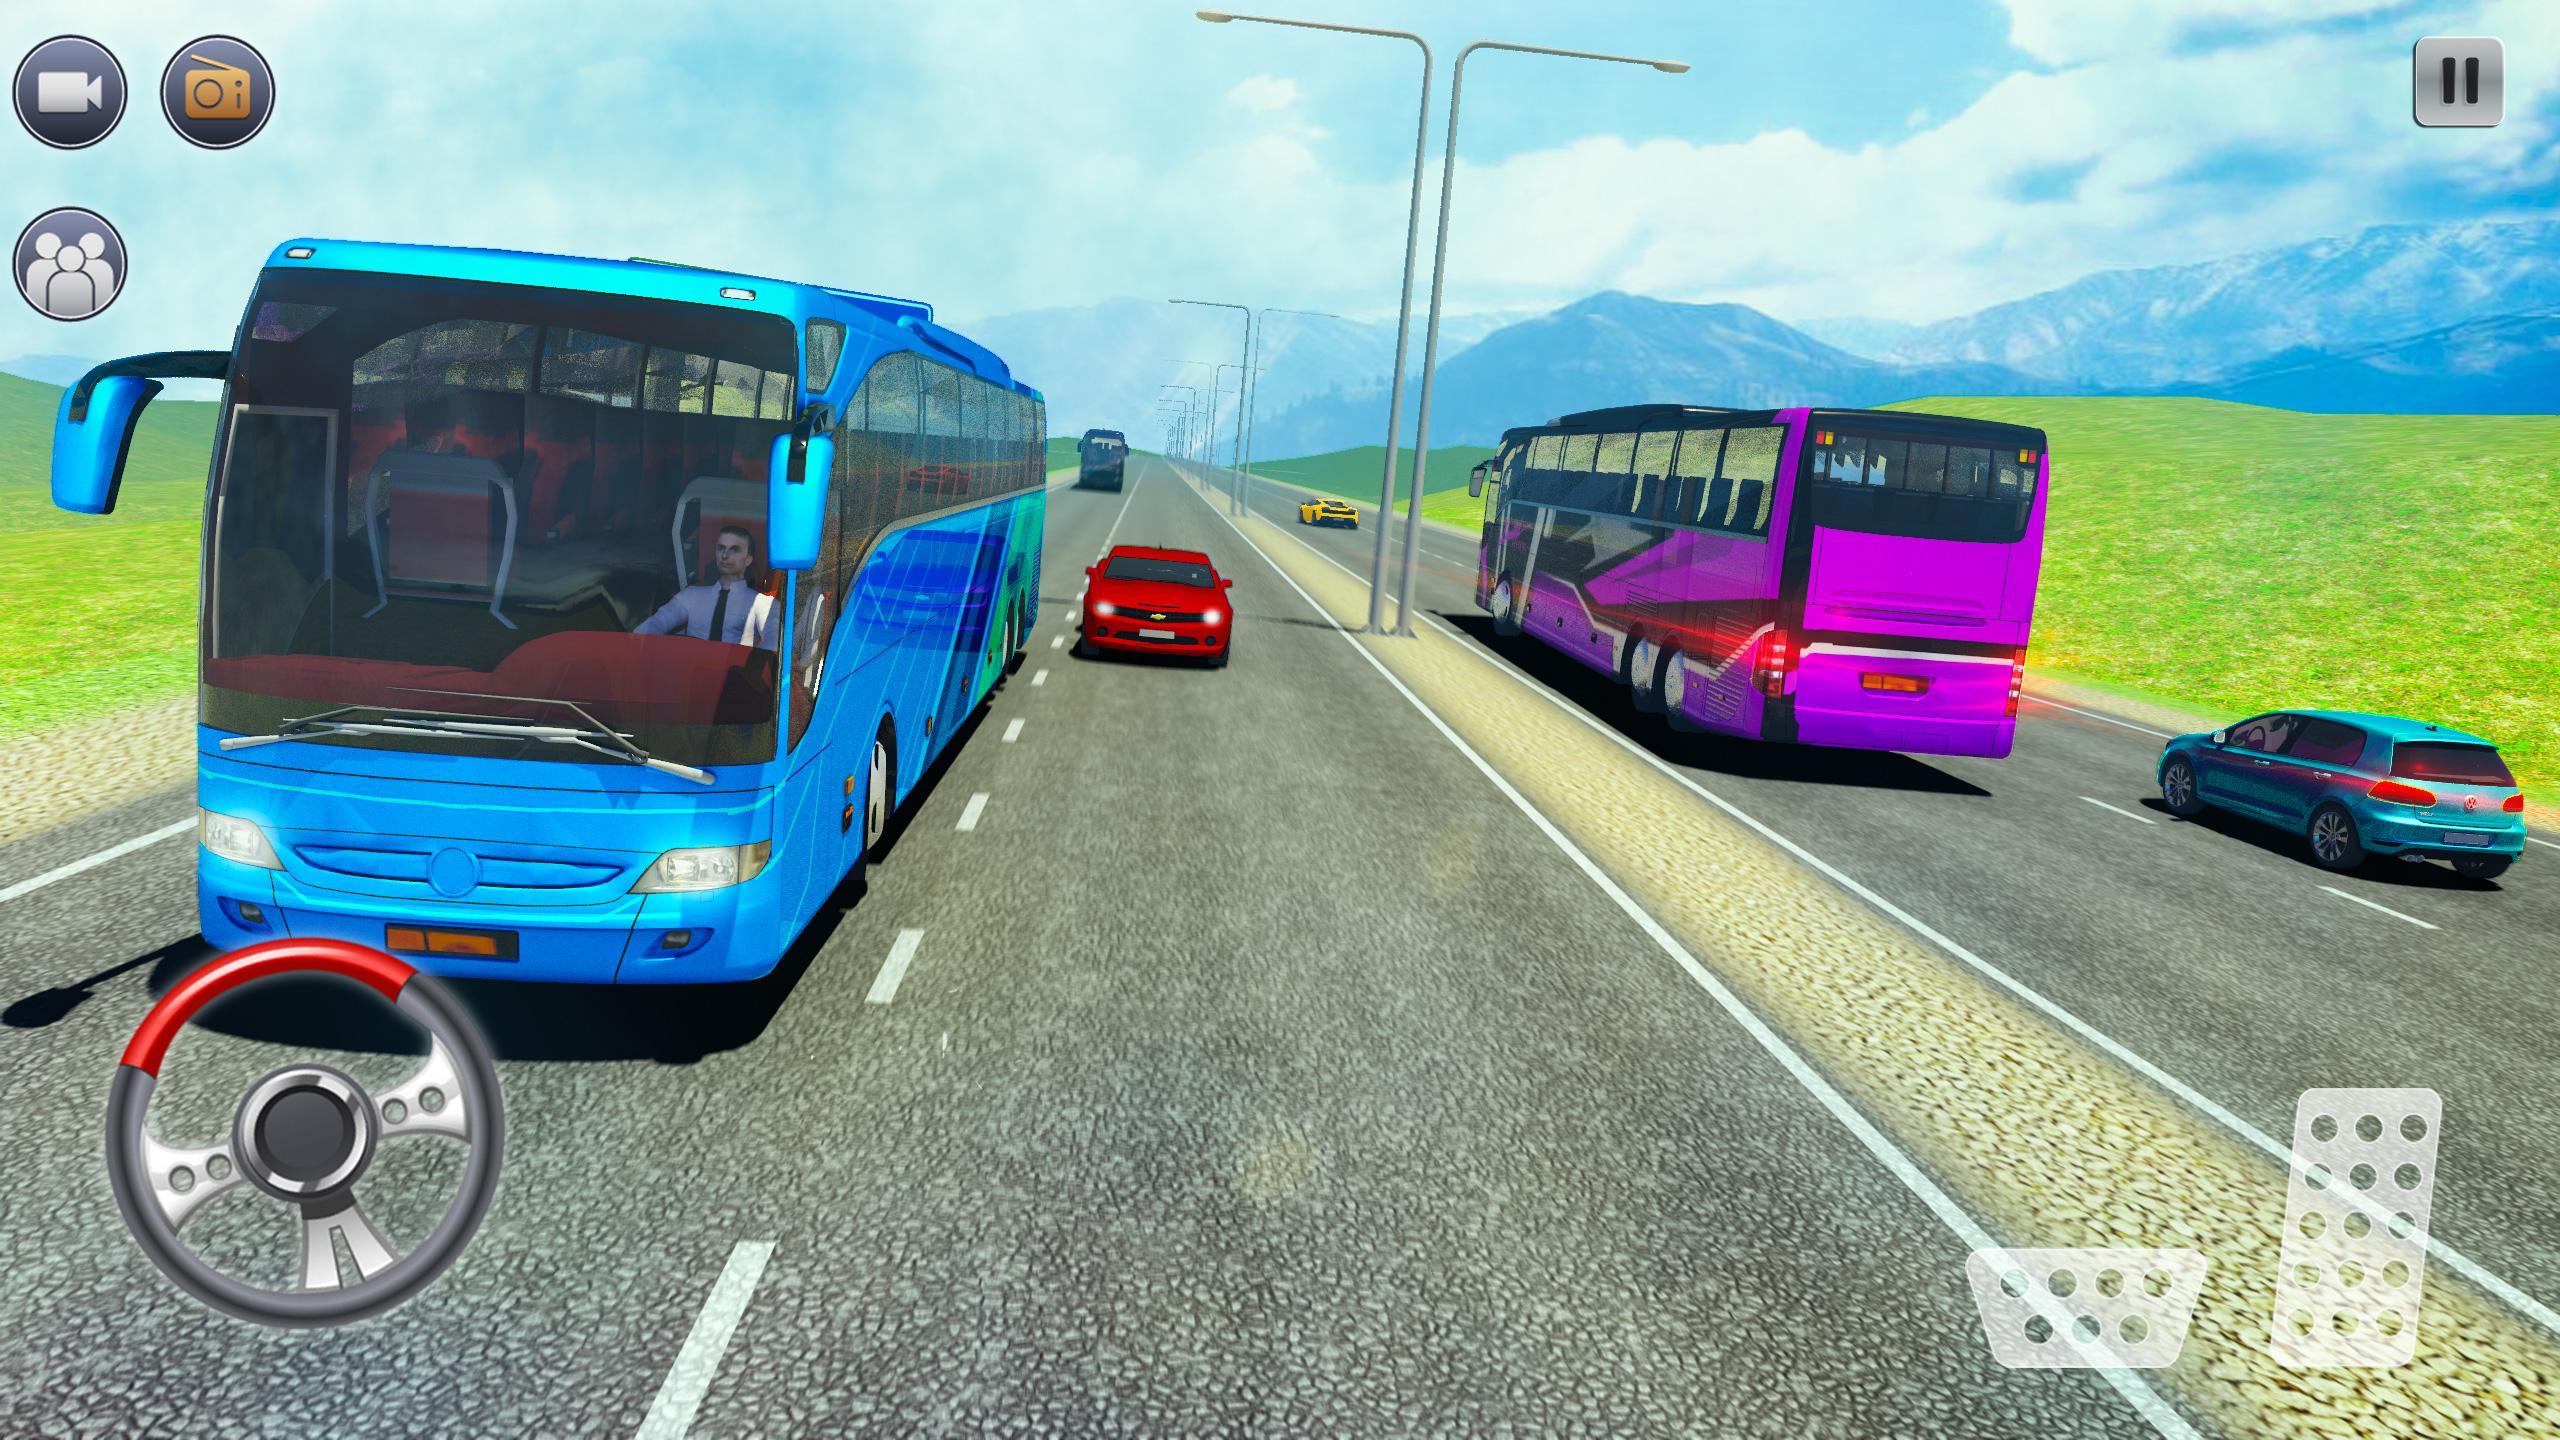 Ultimate автобус игры. Bus Simulator Ultimate автобусы. Автобус симулятор Ultimate обновление. Взлома автобус симулятор ультиматум. Bus game Simulator PC.